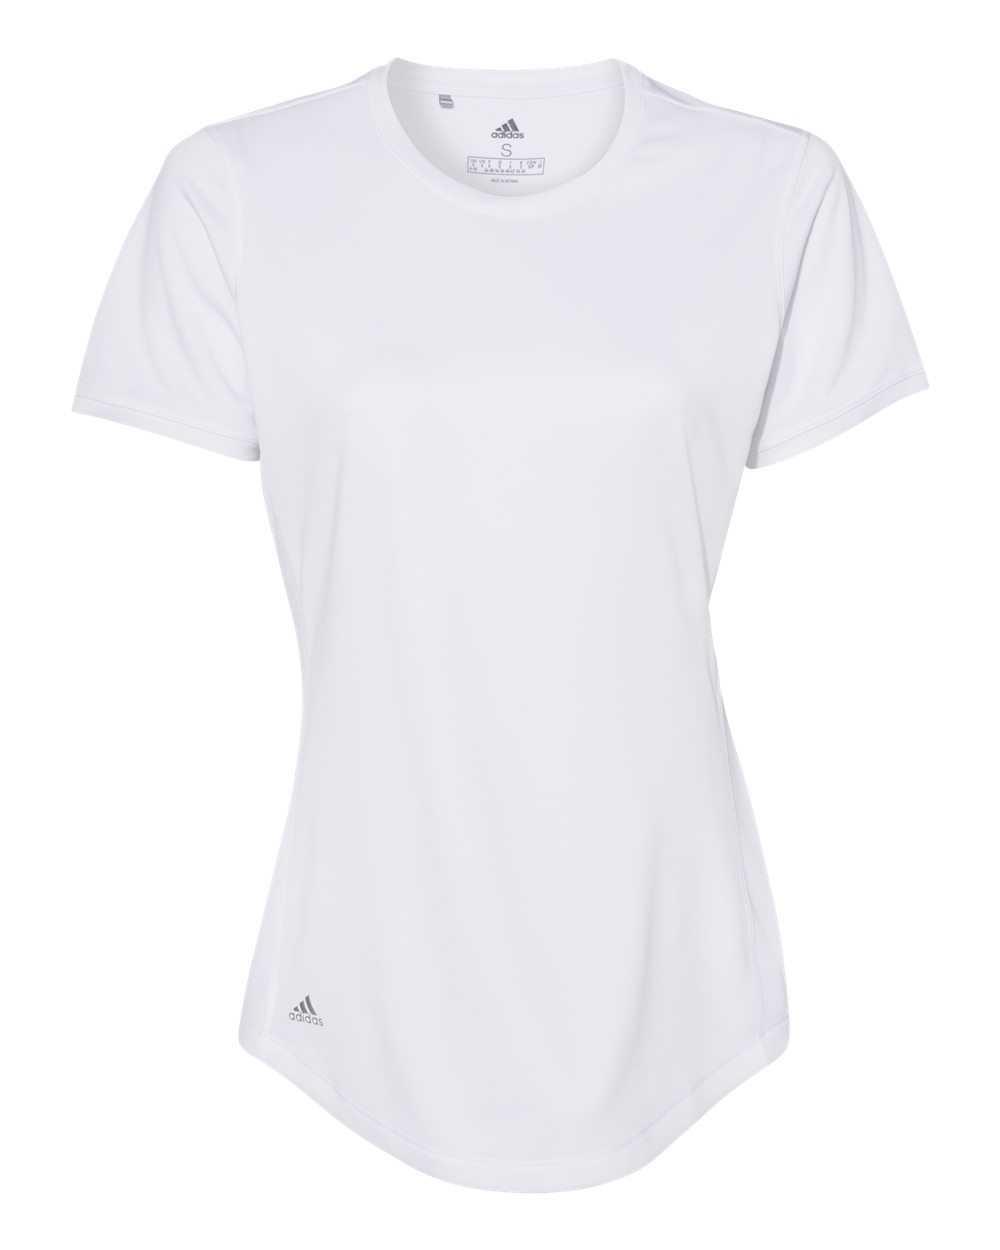 Adidas A377 Women's Sport T-Shirt - White - HIT a Double